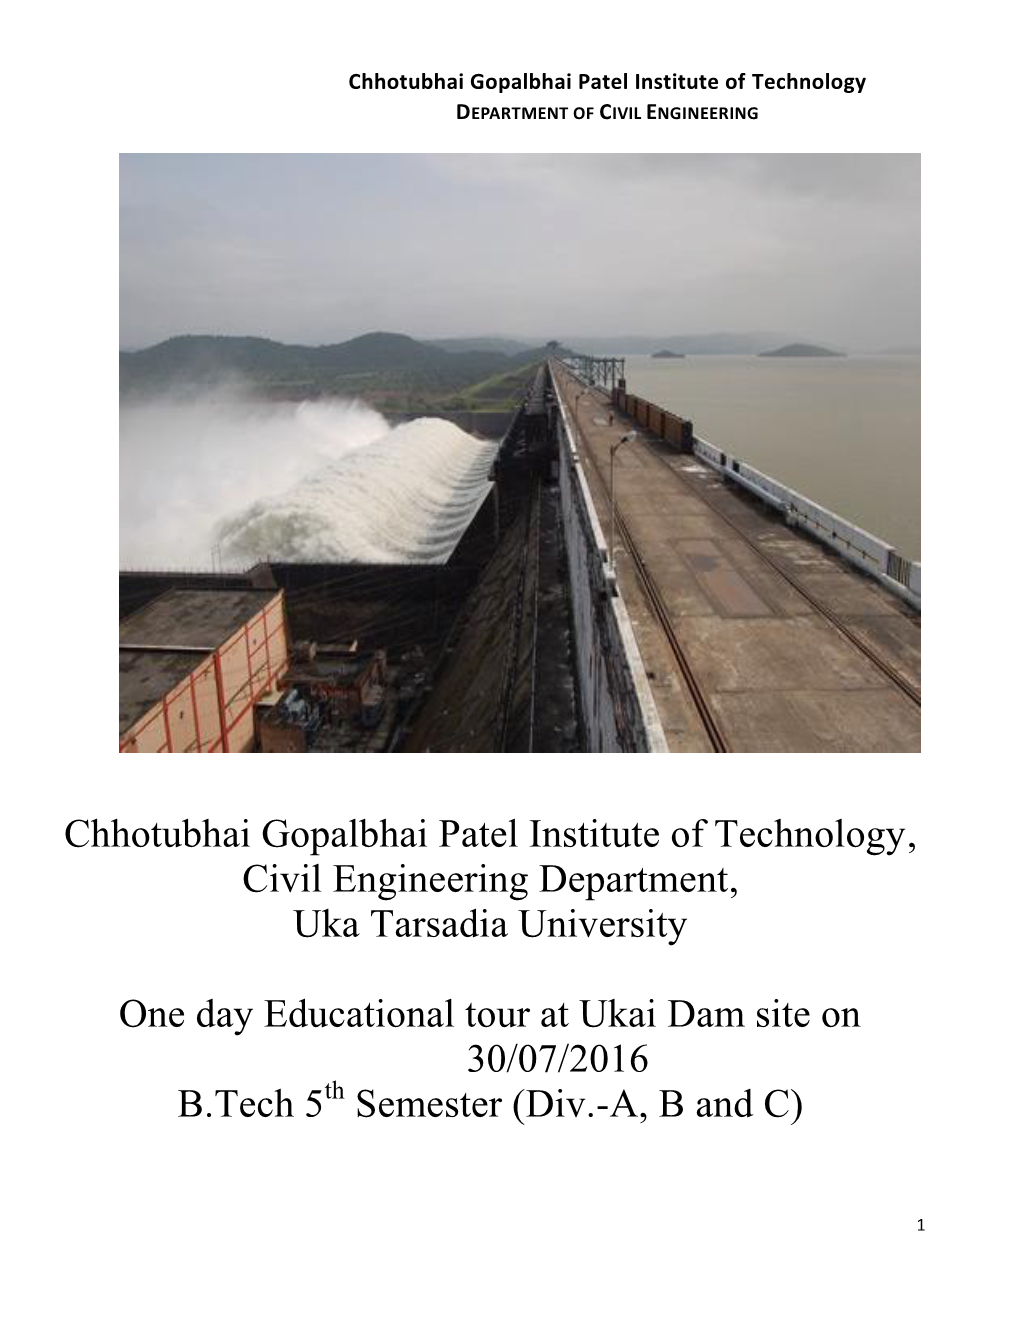 Chhotubhai Gopalbhai Patel Institute of Technology, Civil Engineering Department, Uka Tarsadia University One Day Educational To